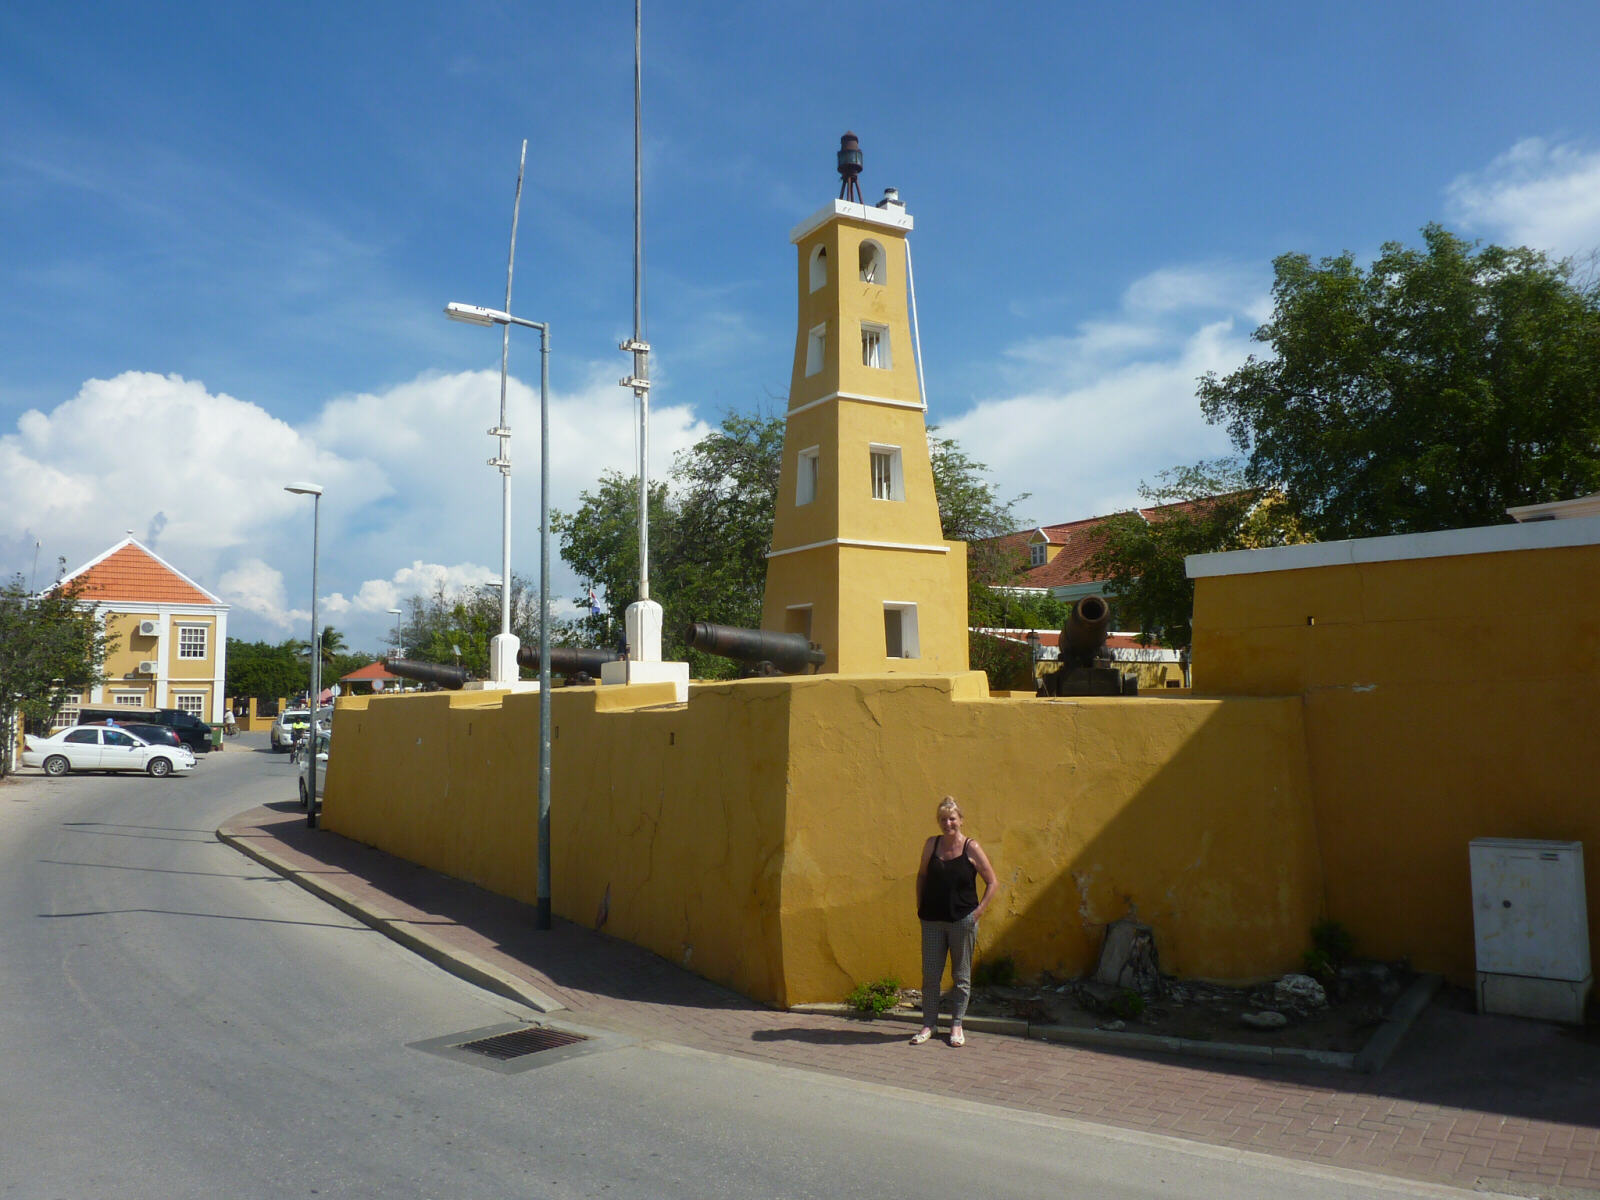 The fort and lighthouse in Kralendijk, Bonaire